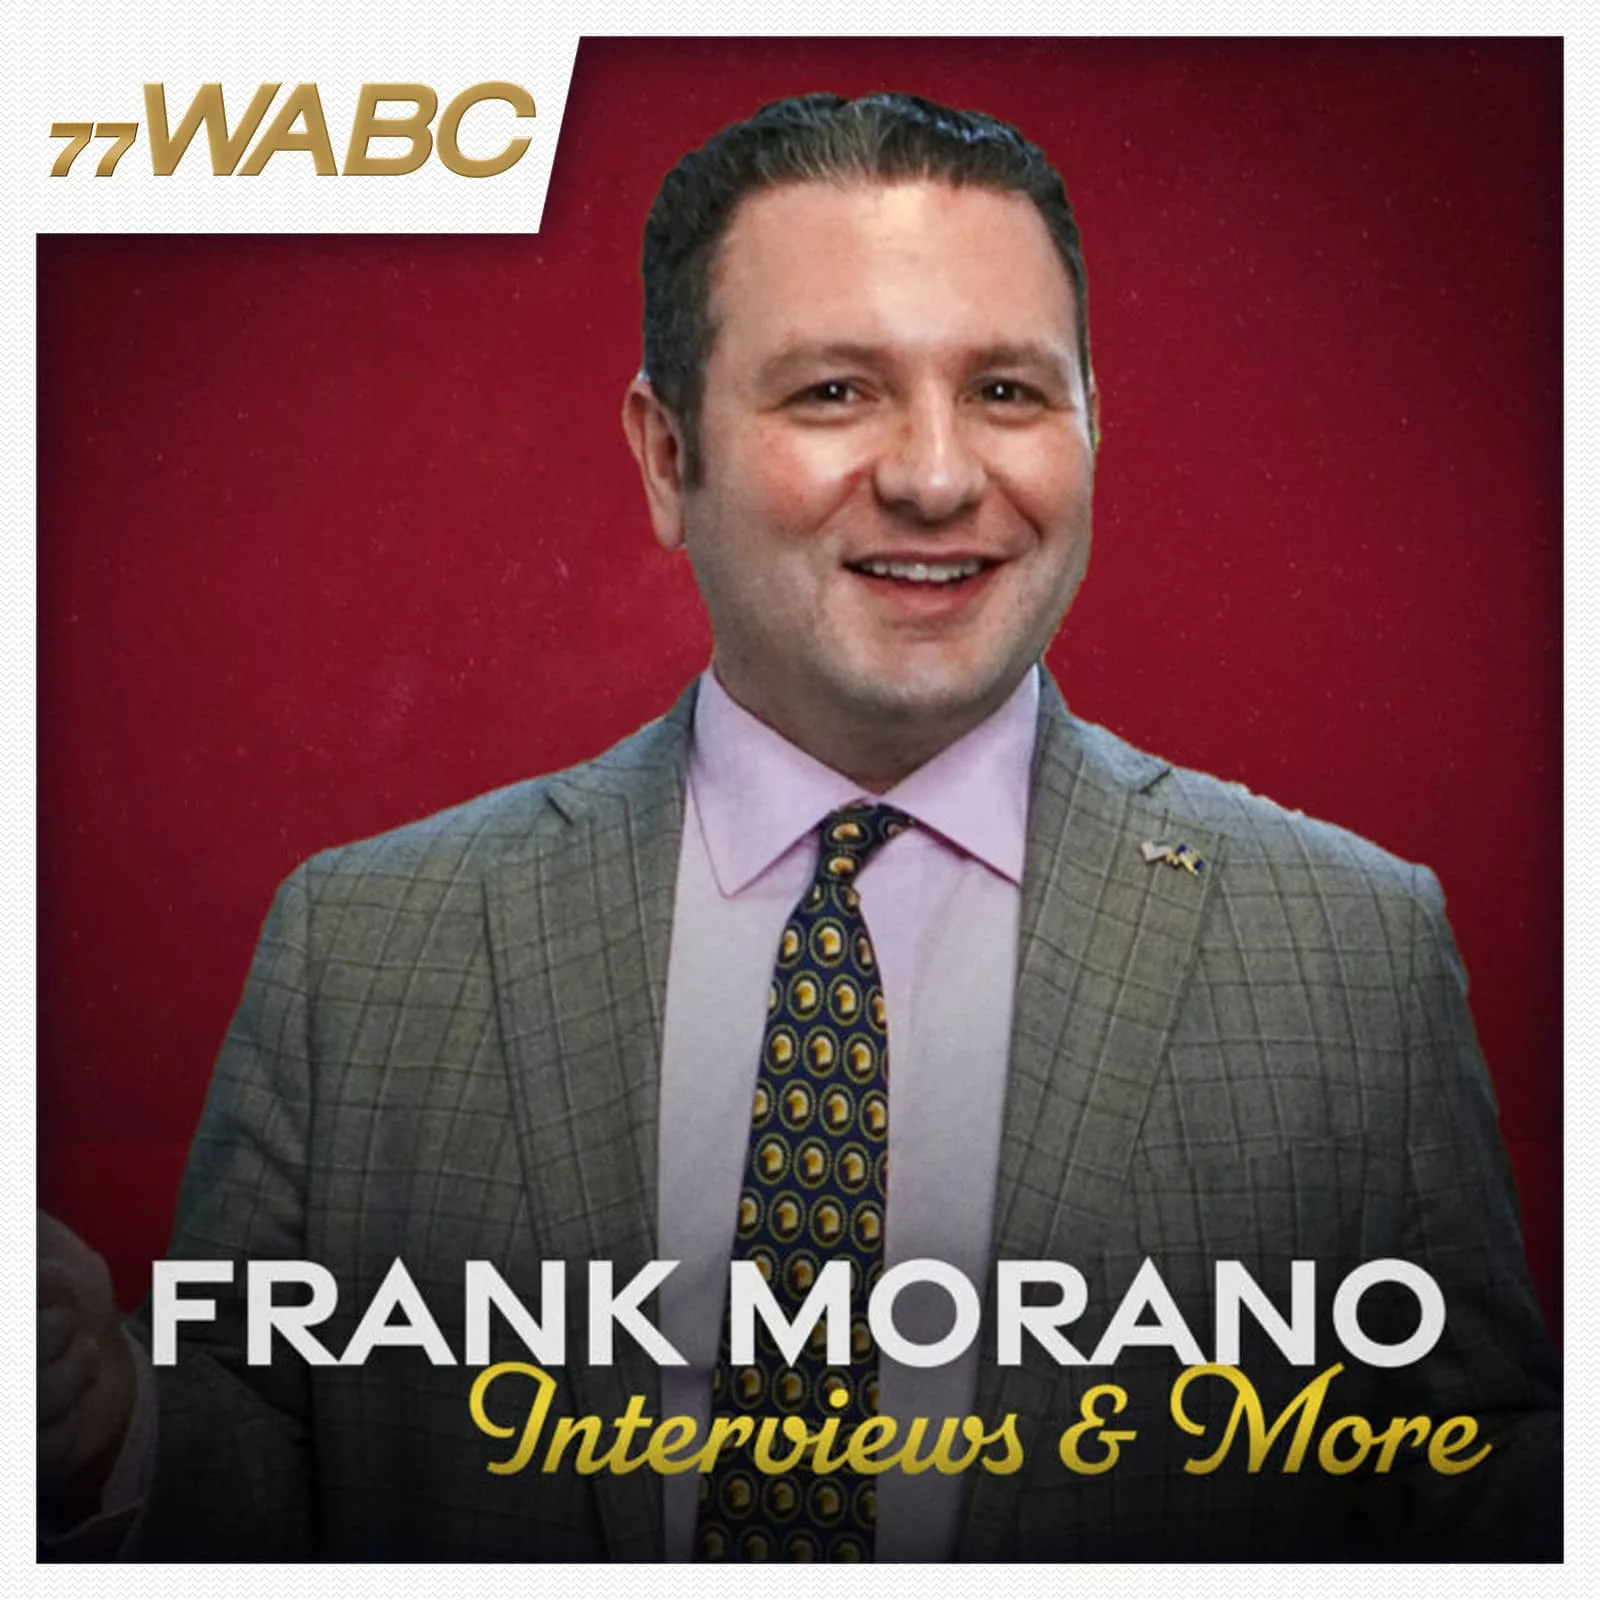 frank-morano-interviews-and-more-podcast-new-logo88615